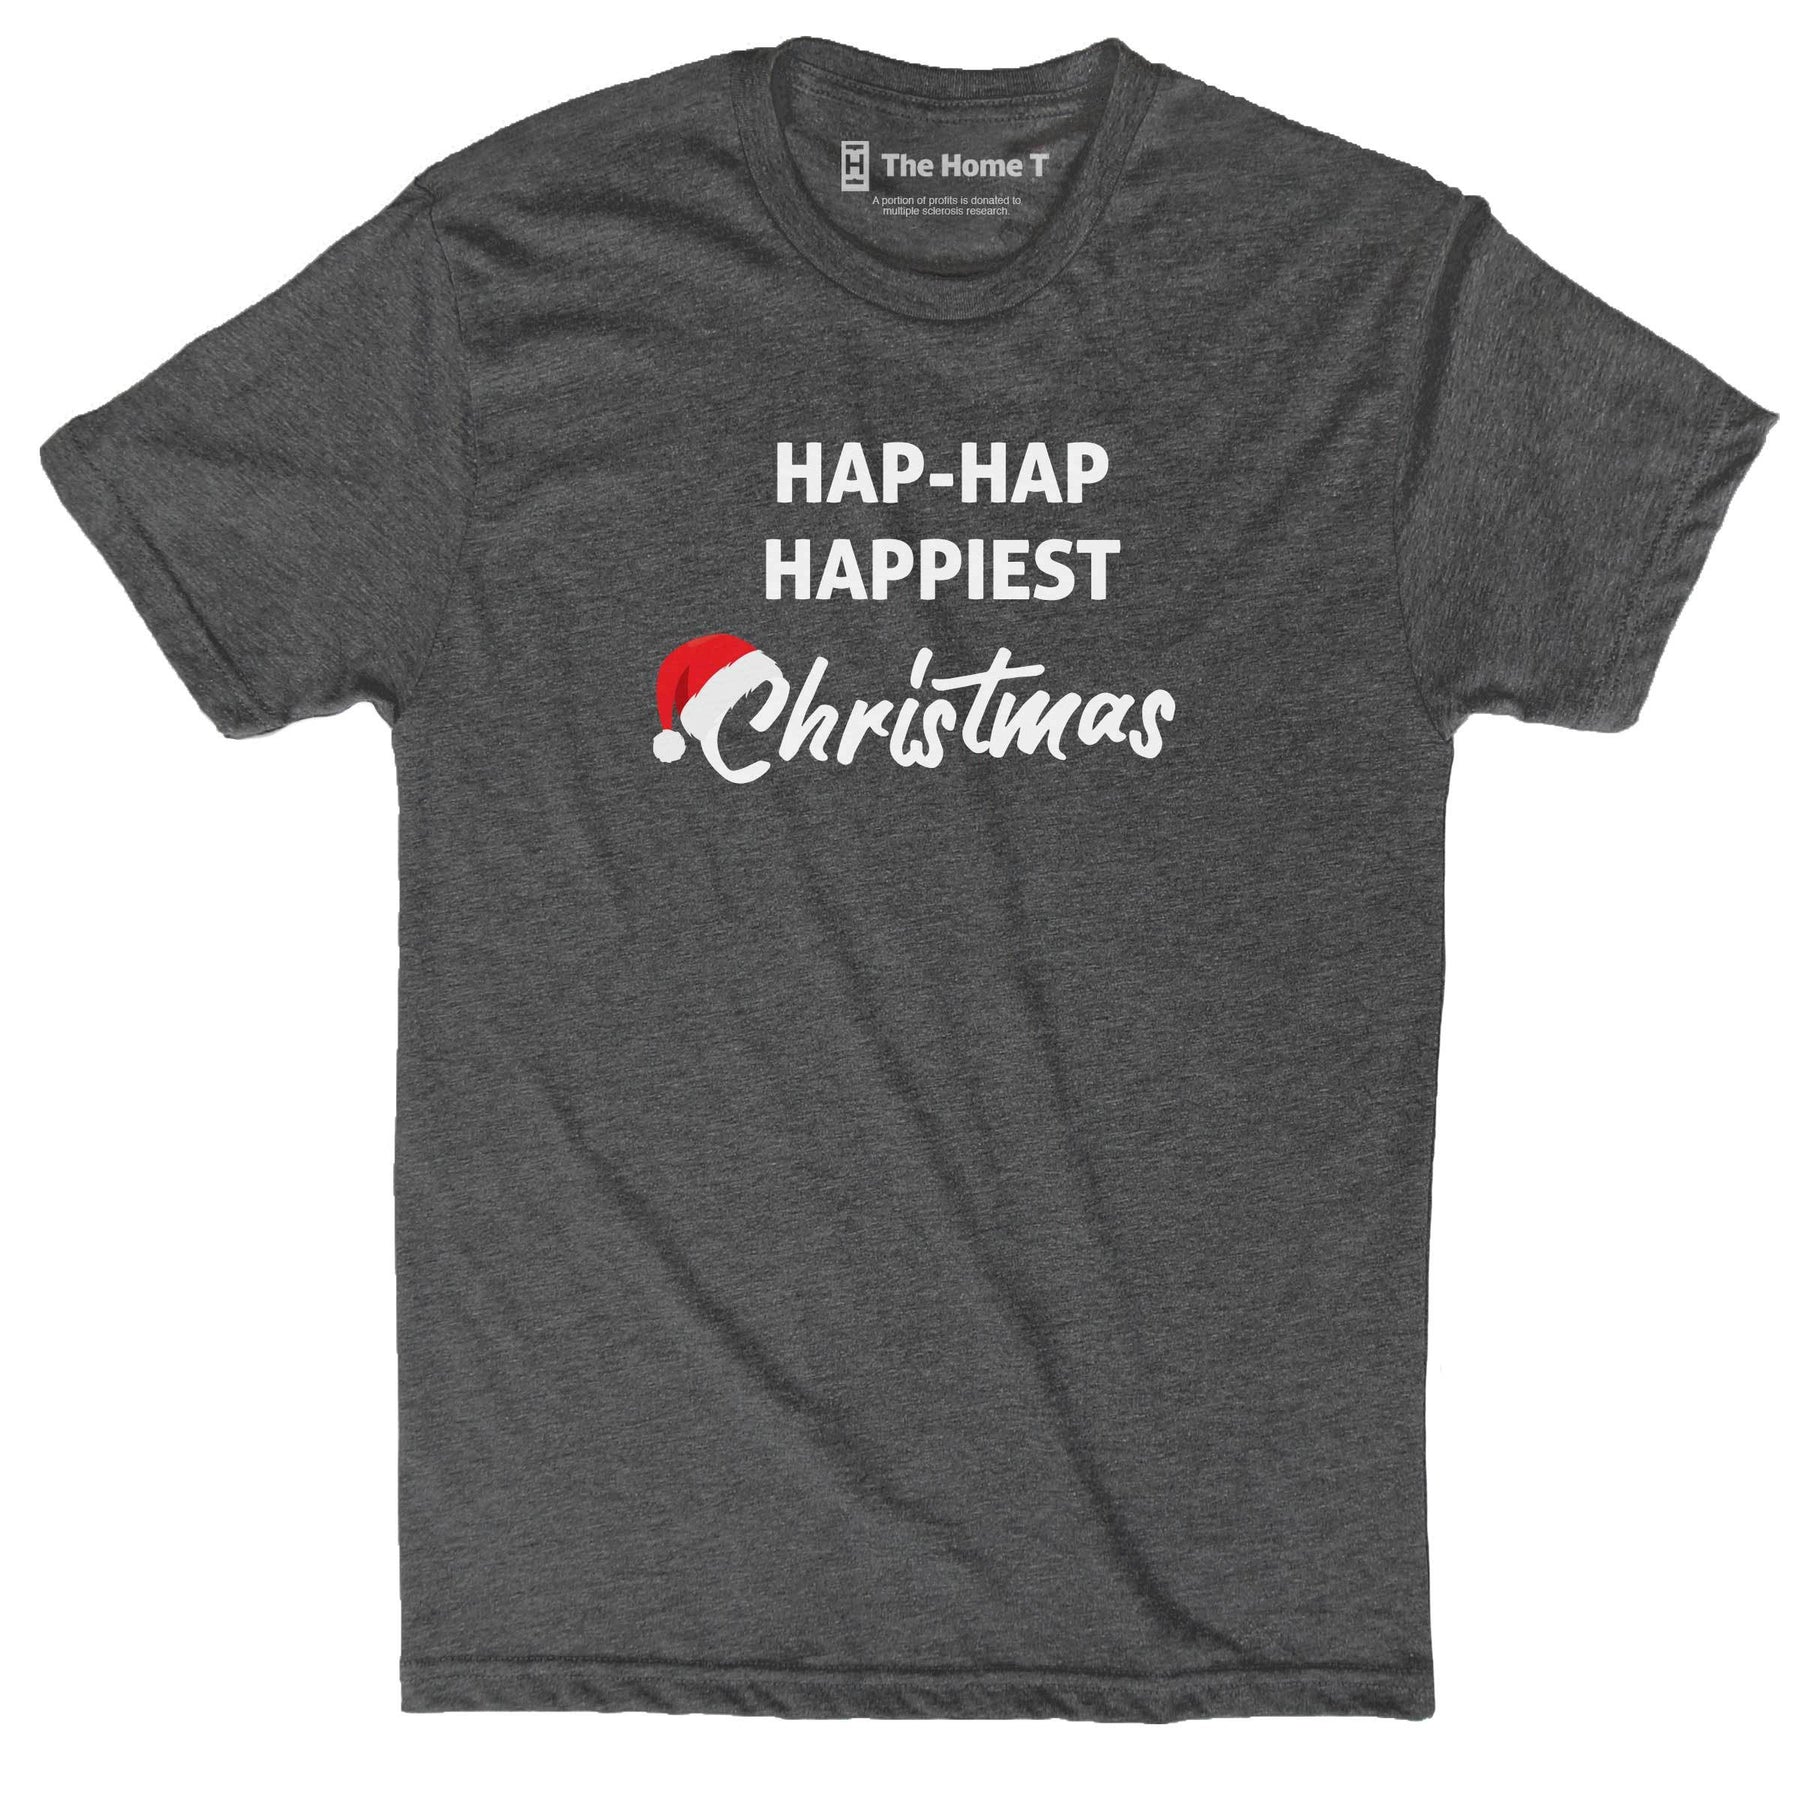 Hap-Hap Happiest Christmas